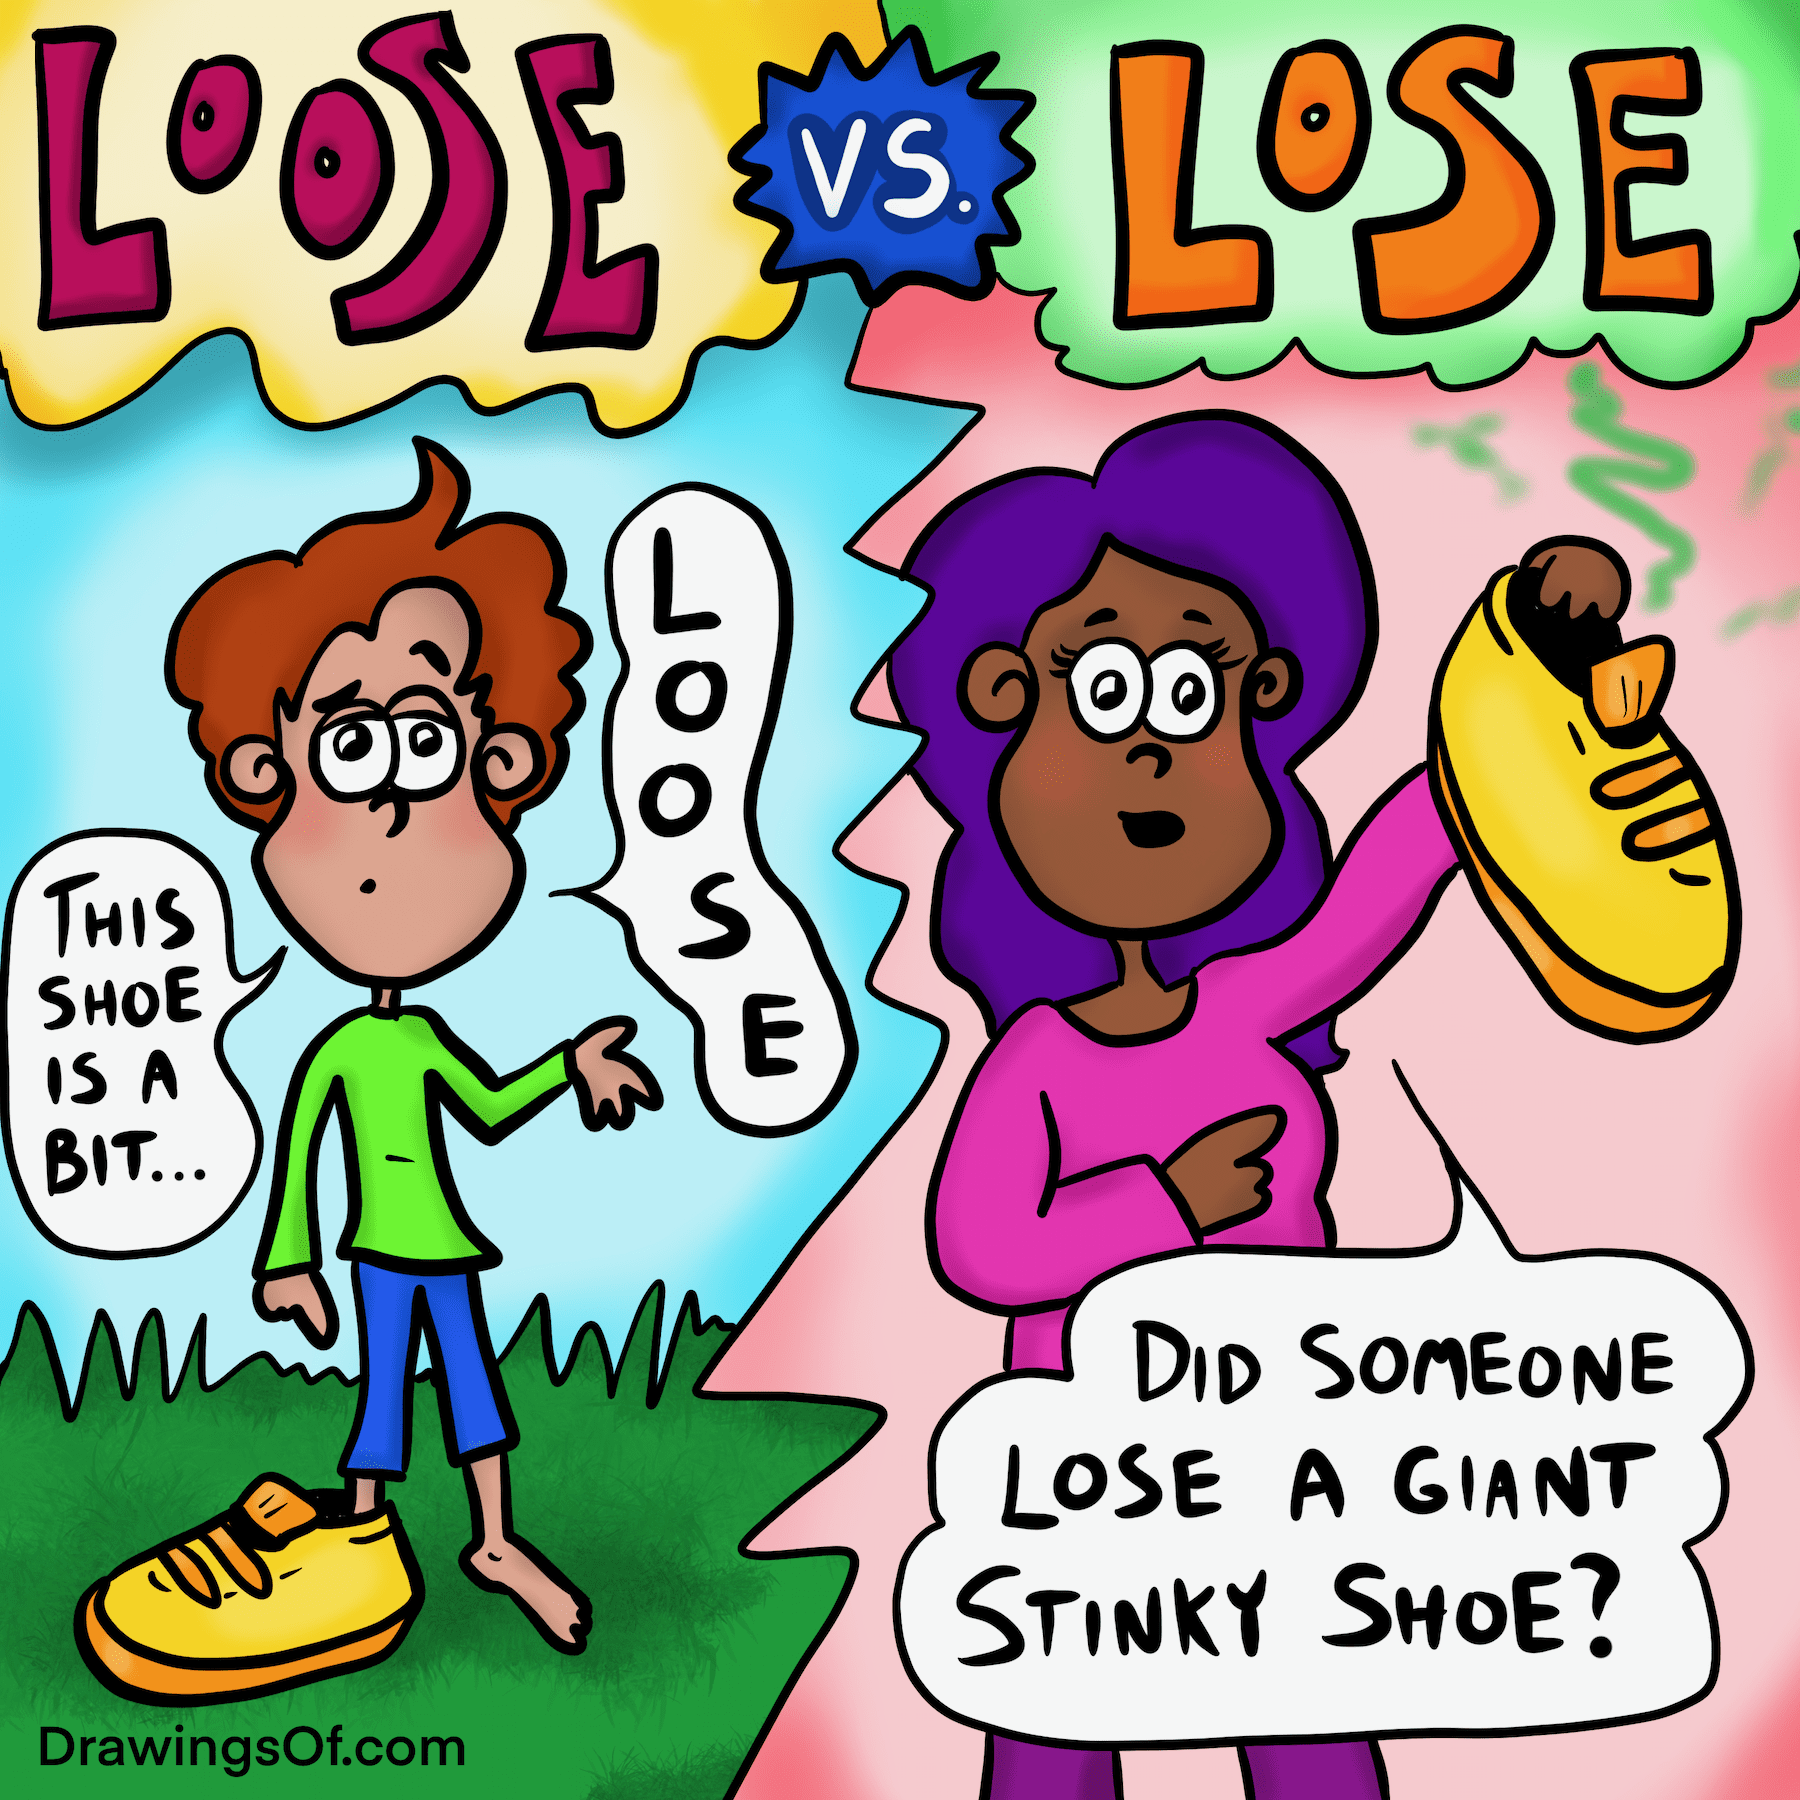 Loose or lose